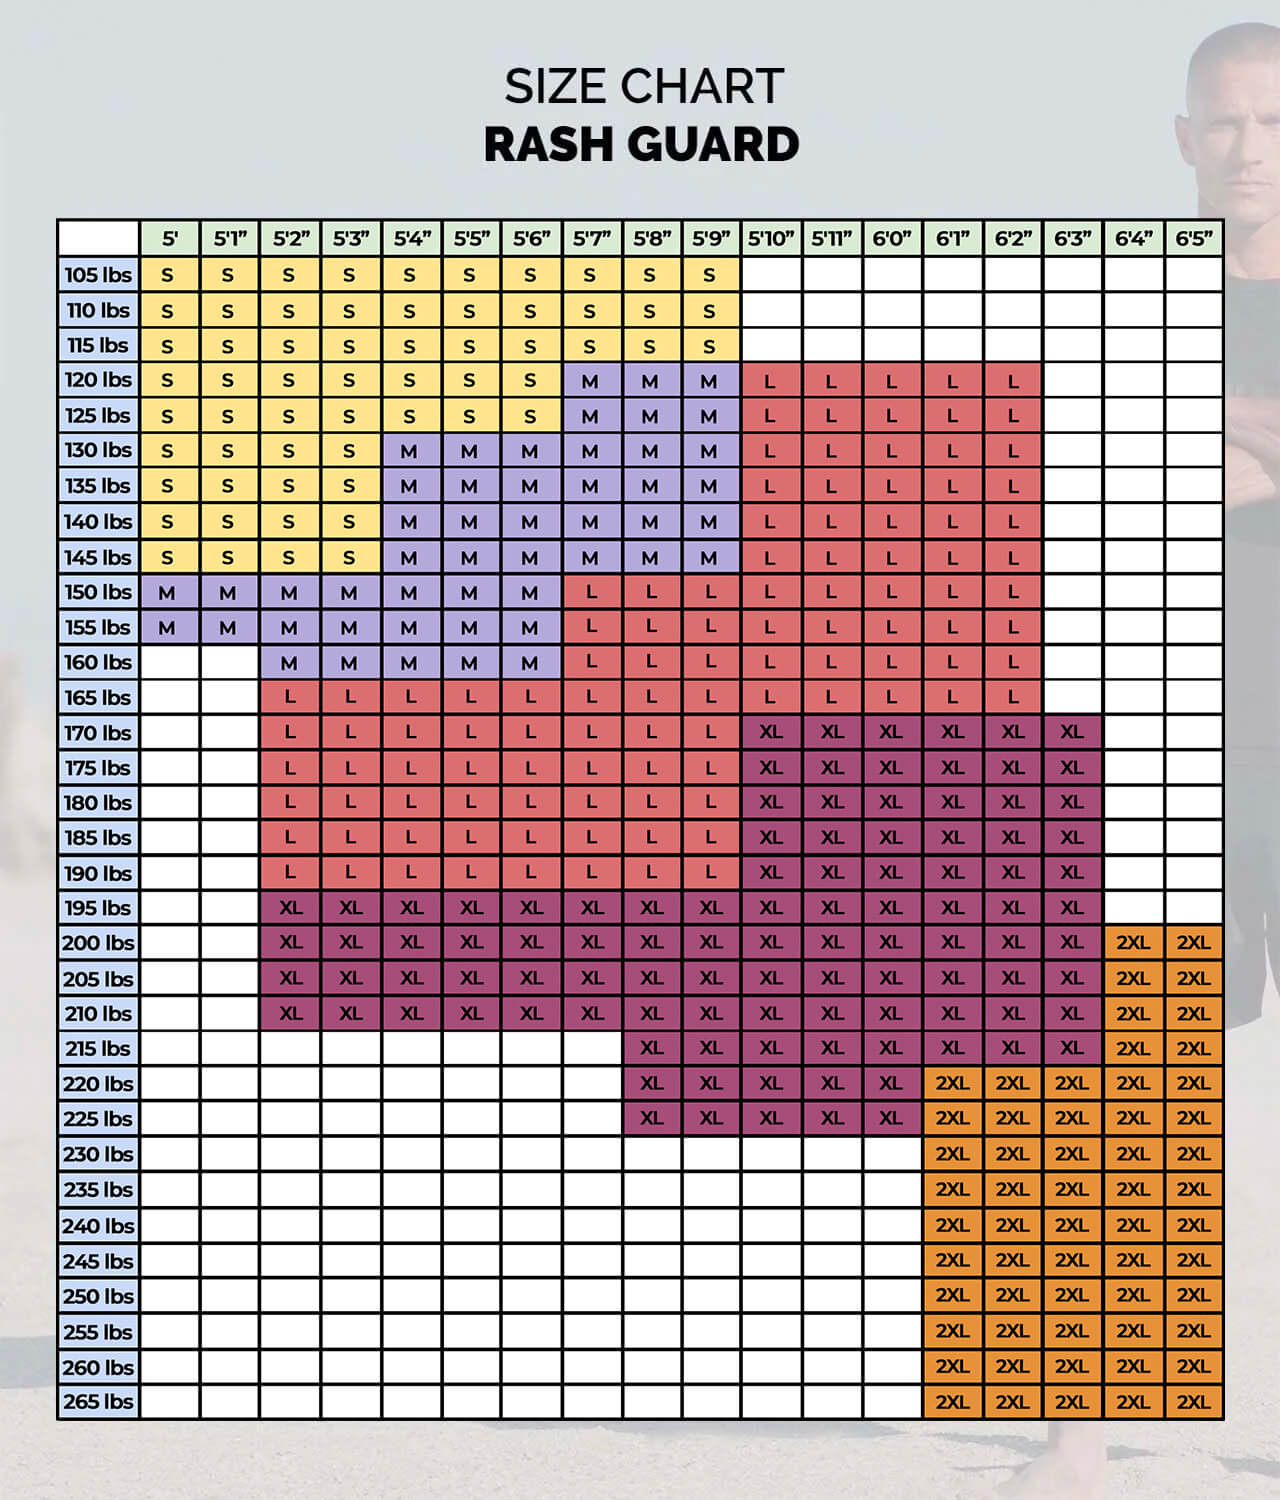 Elite Sports Men's Standard Brown Short Sleeve Jiu Jitsu BJJ Rash Guard Size Guide